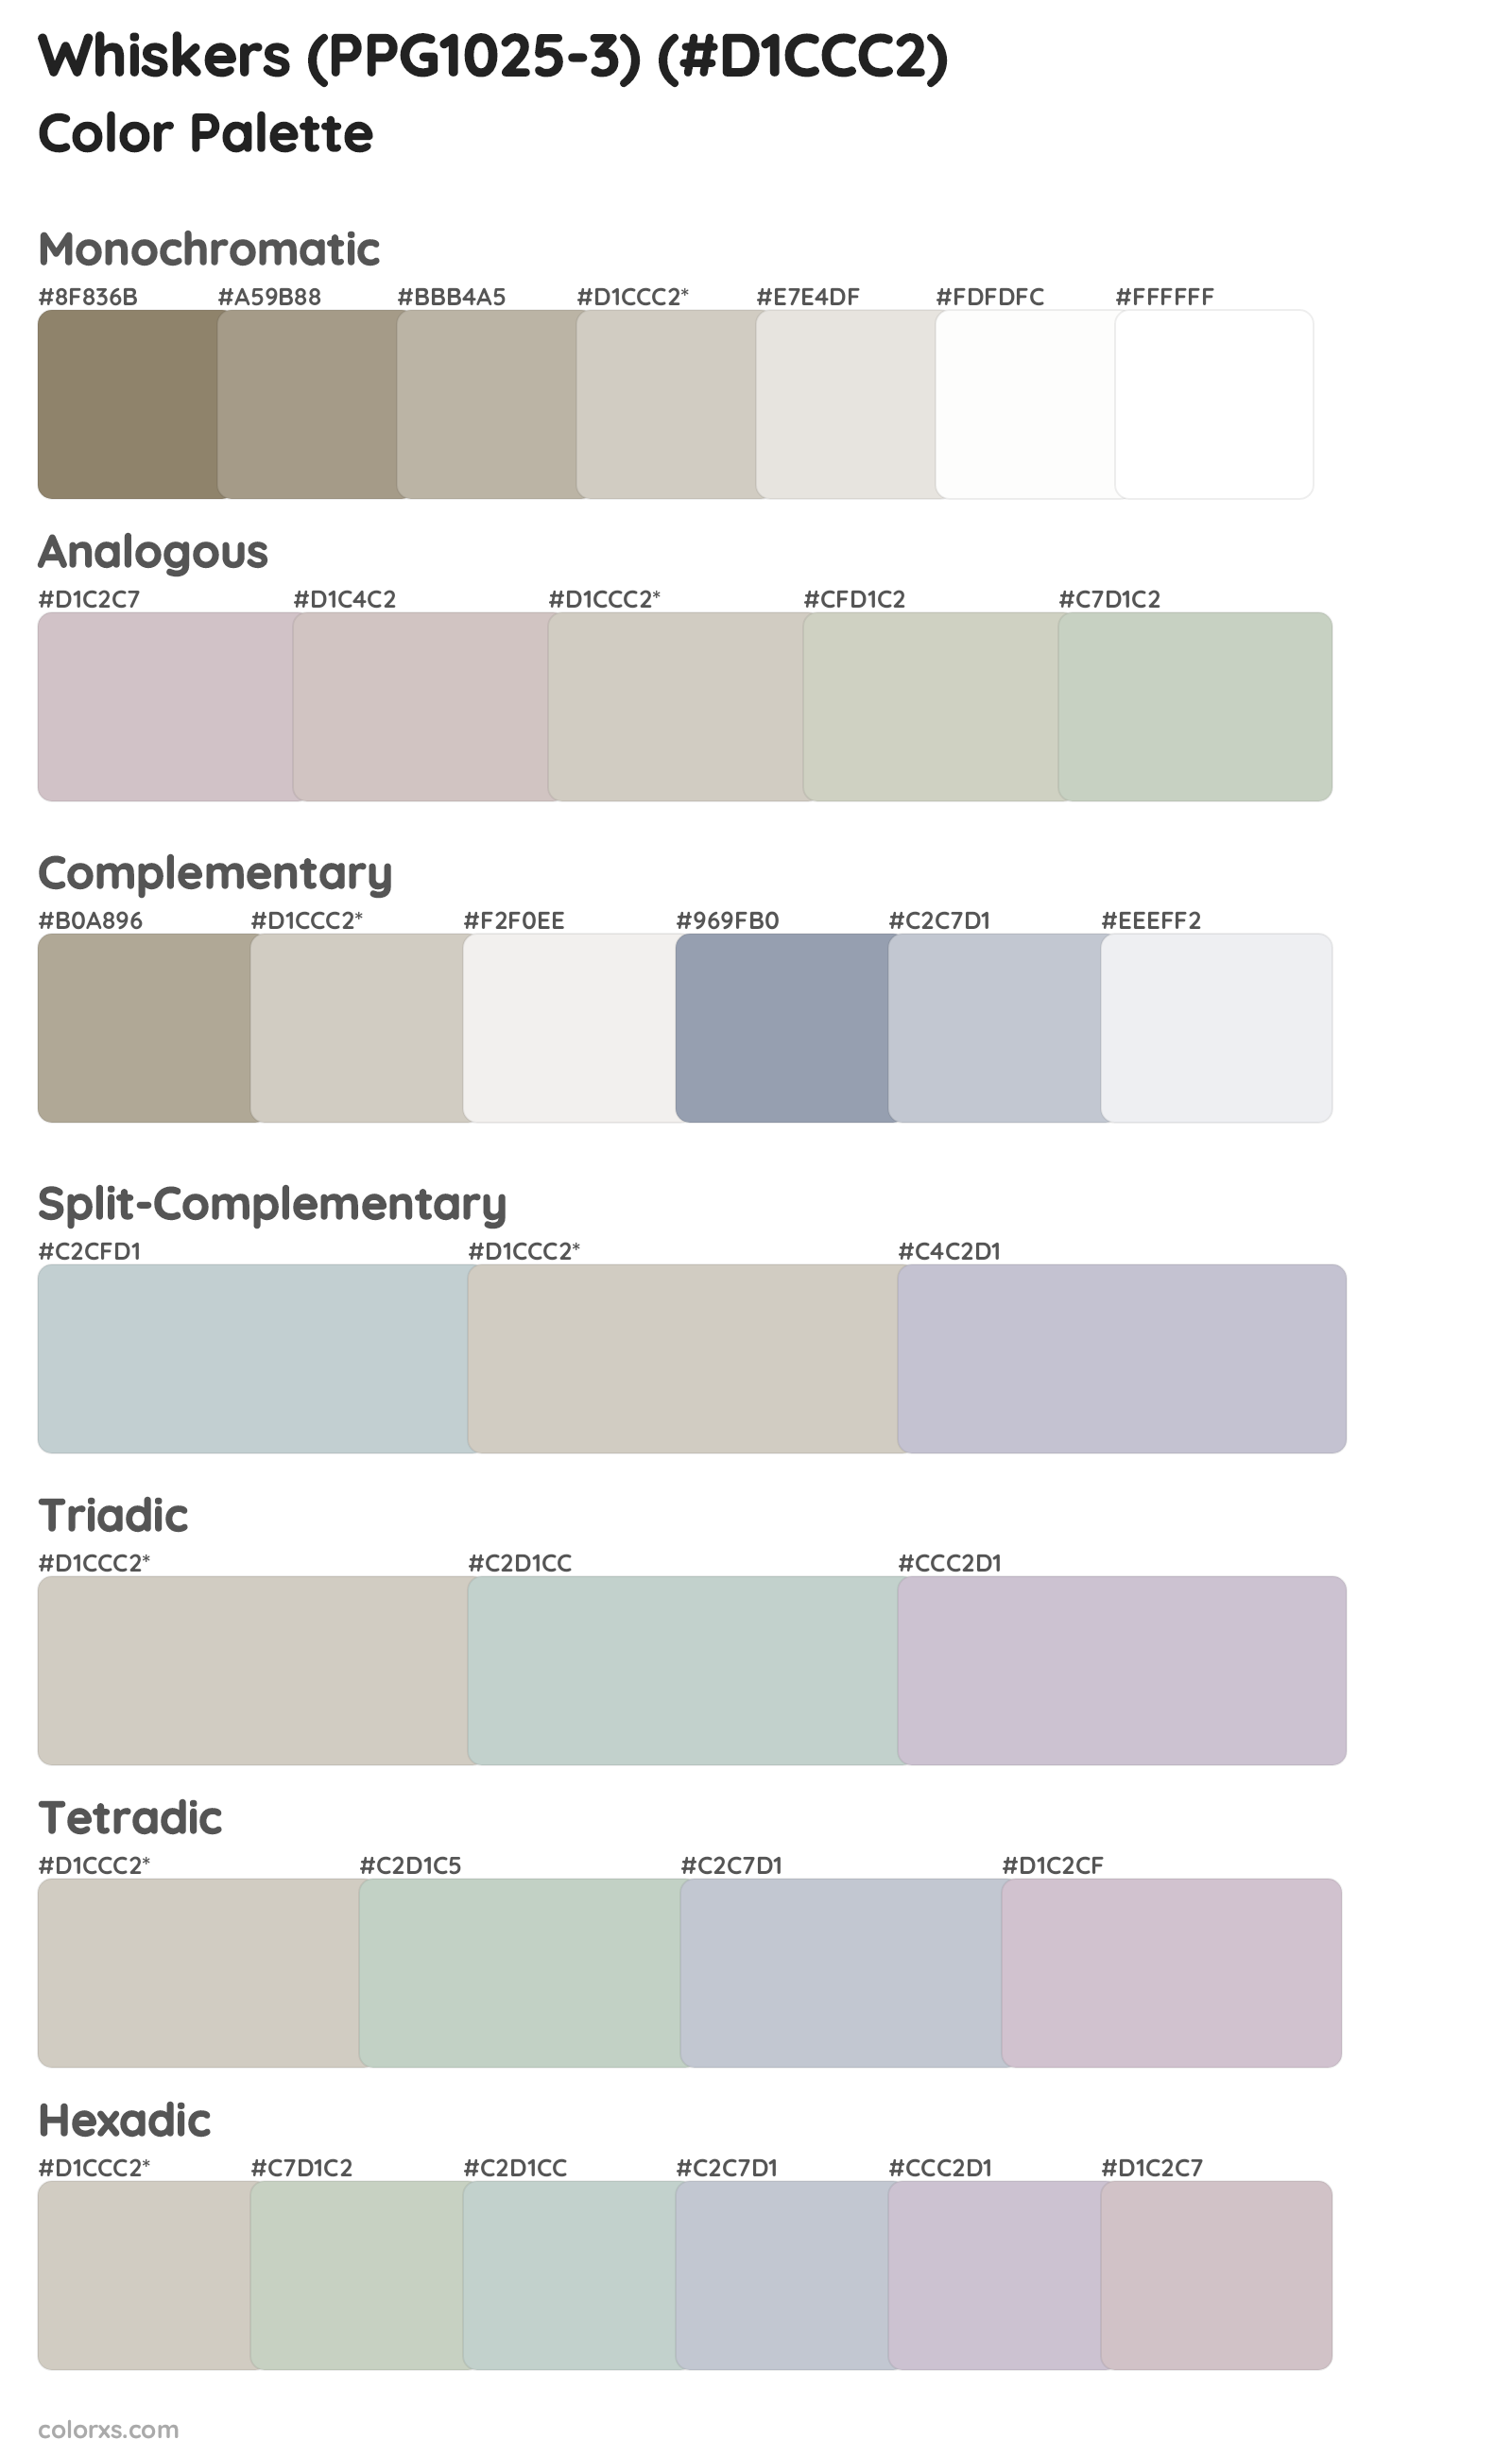 Whiskers (PPG1025-3) Color Scheme Palettes